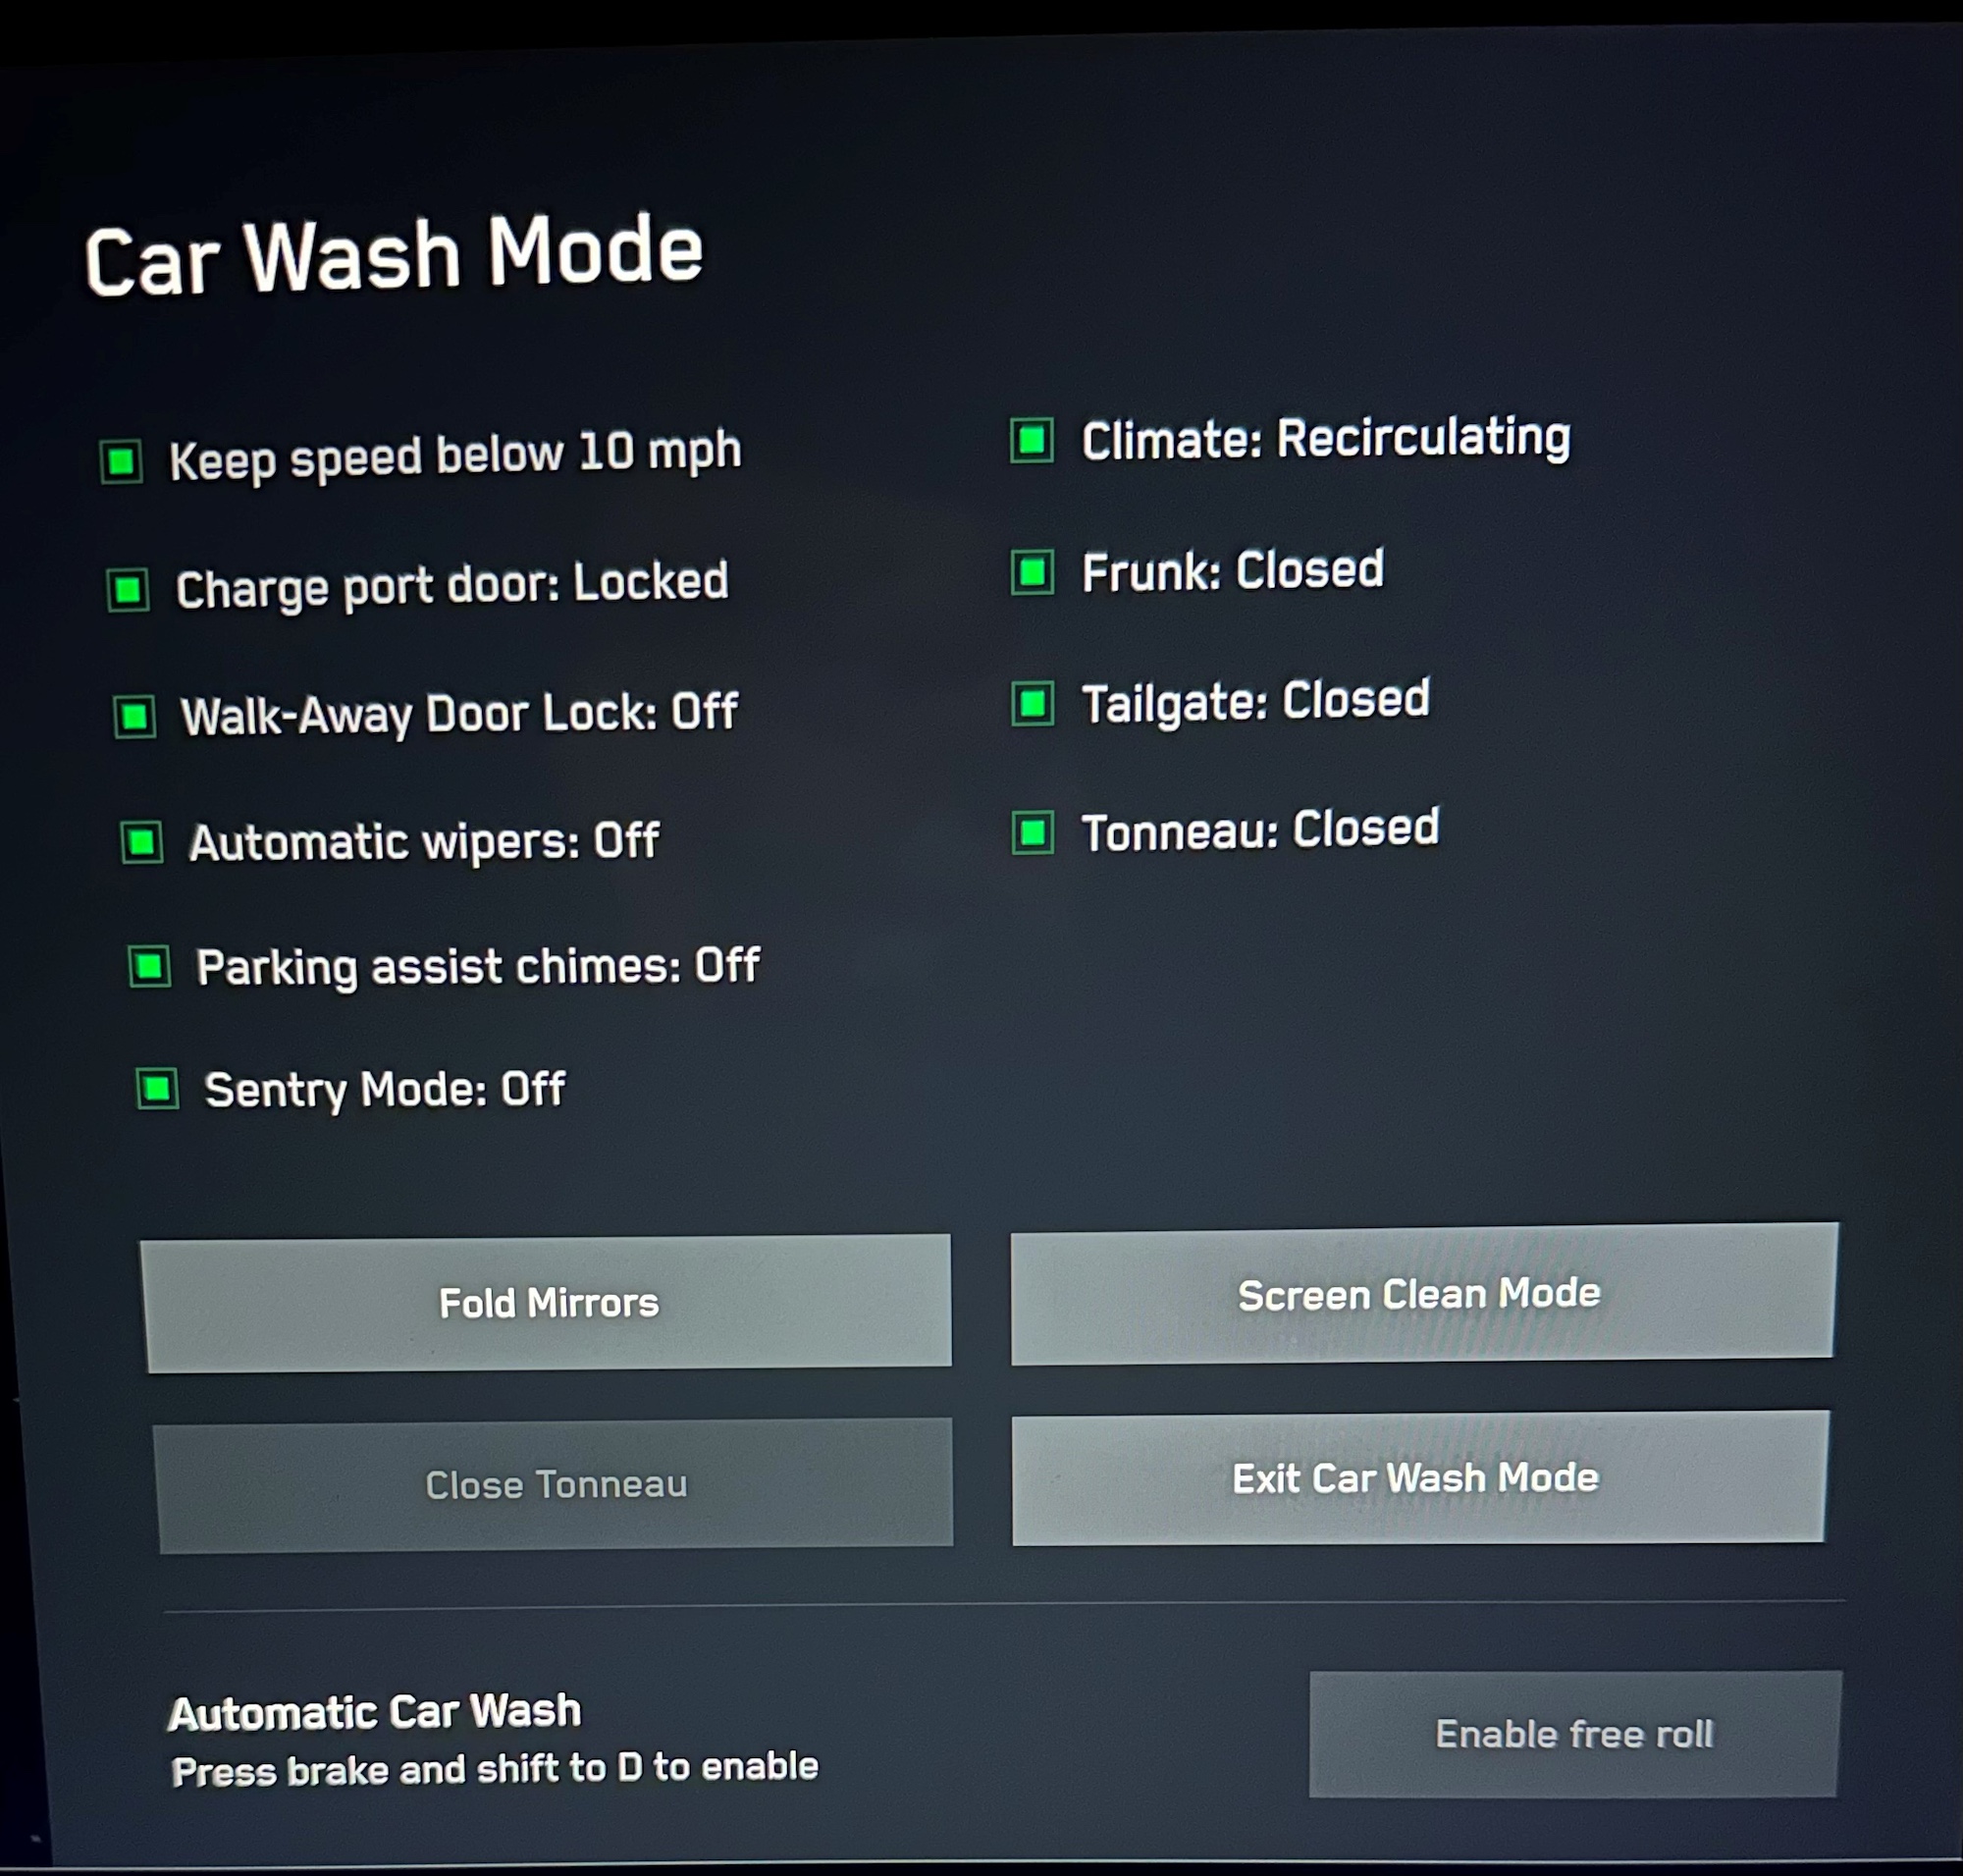 Tesla Cybertruck Your Car Wash Experiences? Tips? CarWashMode